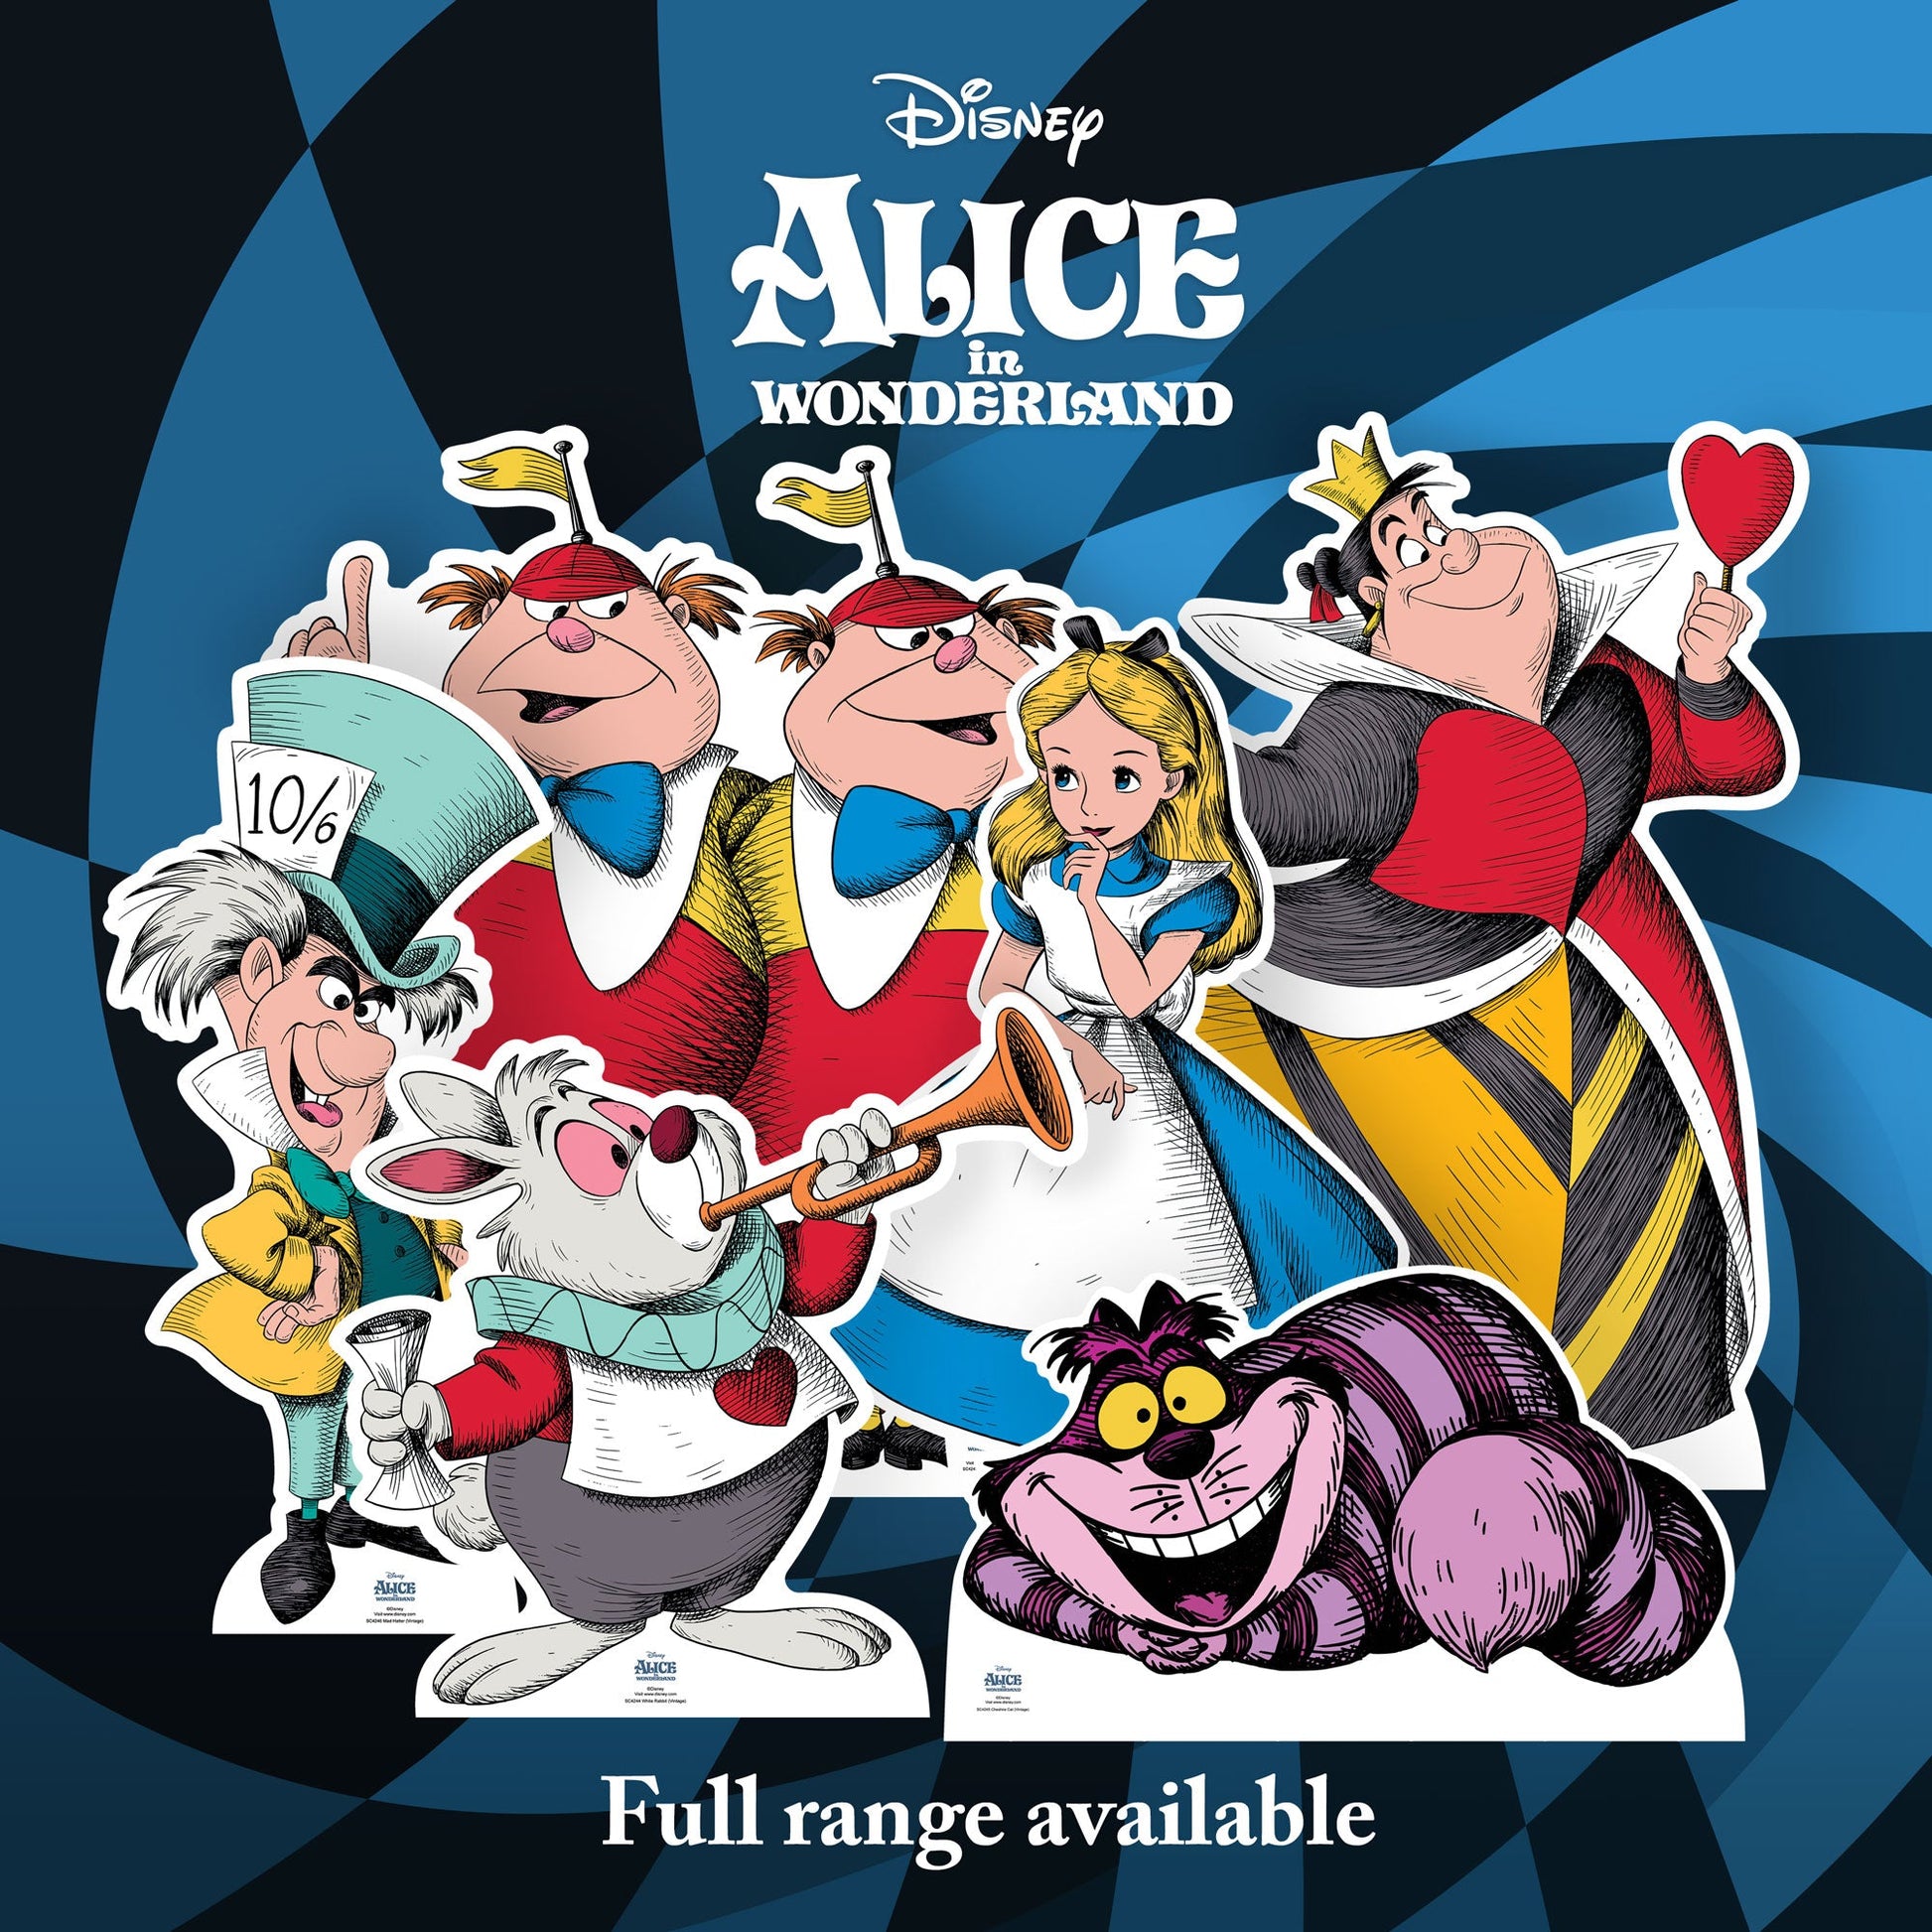 Vintage Alice in Wonderland Alice Star Mini Cardboard Cutout